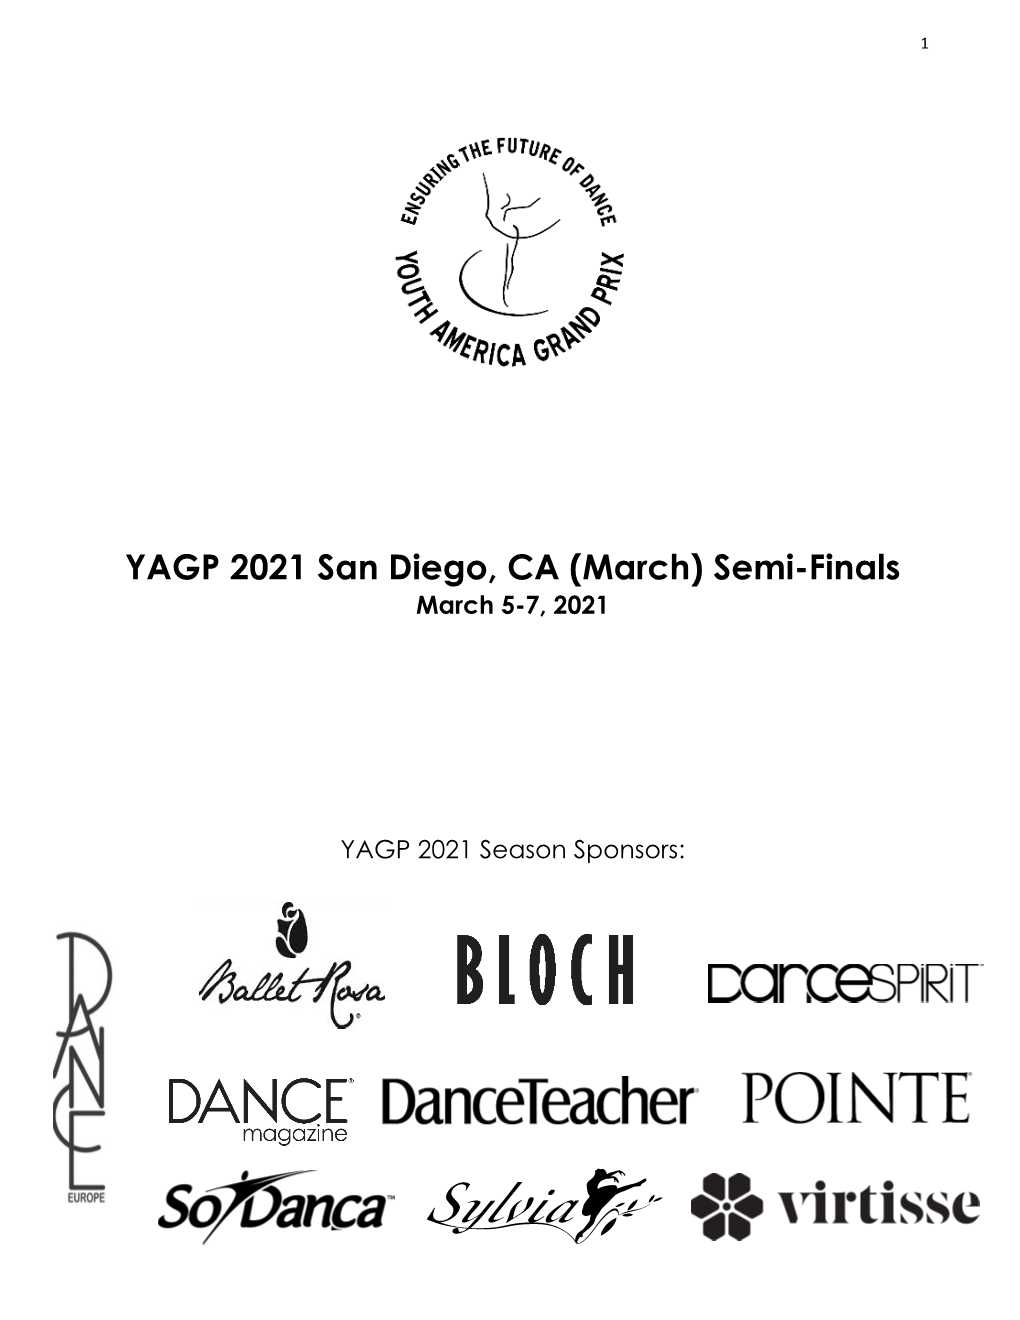 YAGP 2021 San Diego, CA (March) Semi-Finals March 5-7, 2021